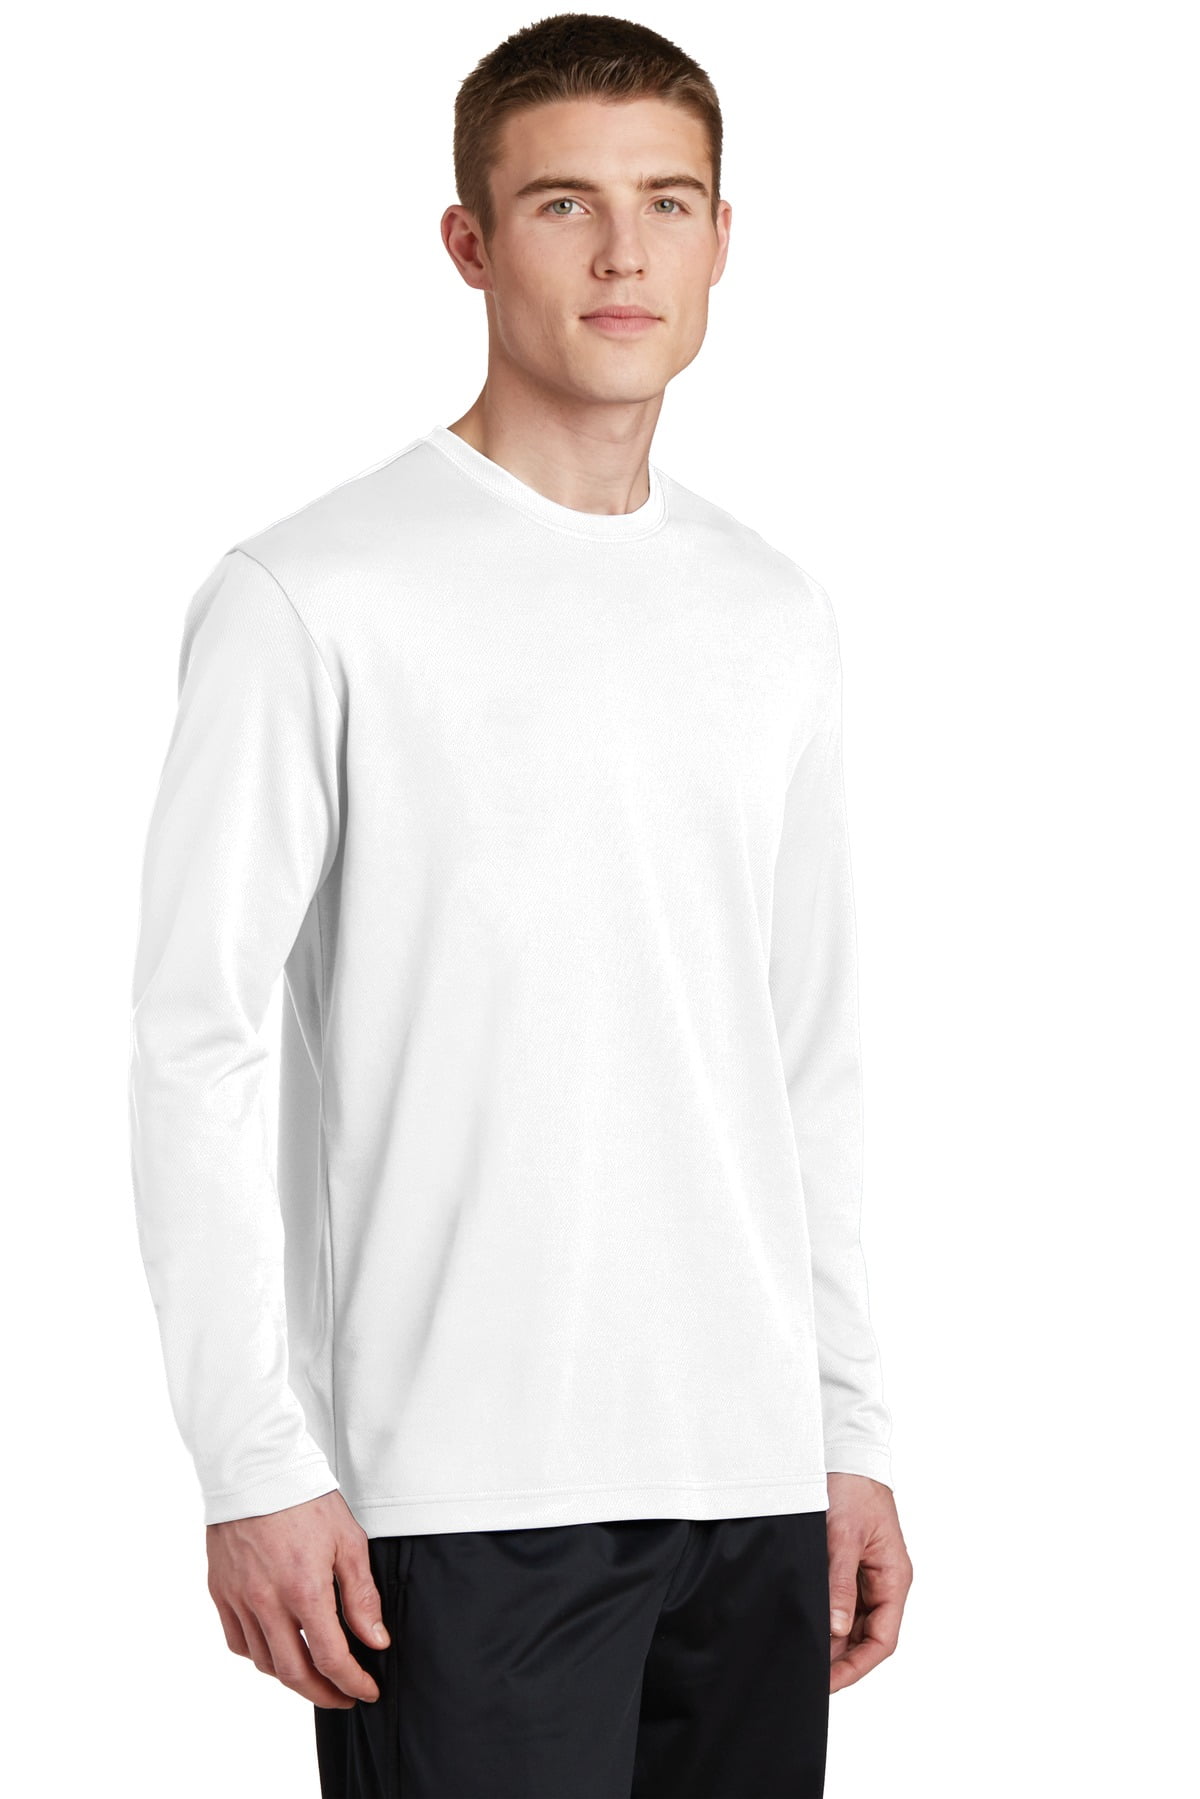 Sport Tek Adult Male Men Crew Neck Plain Long Sleeves T-Shirt White X-Large  